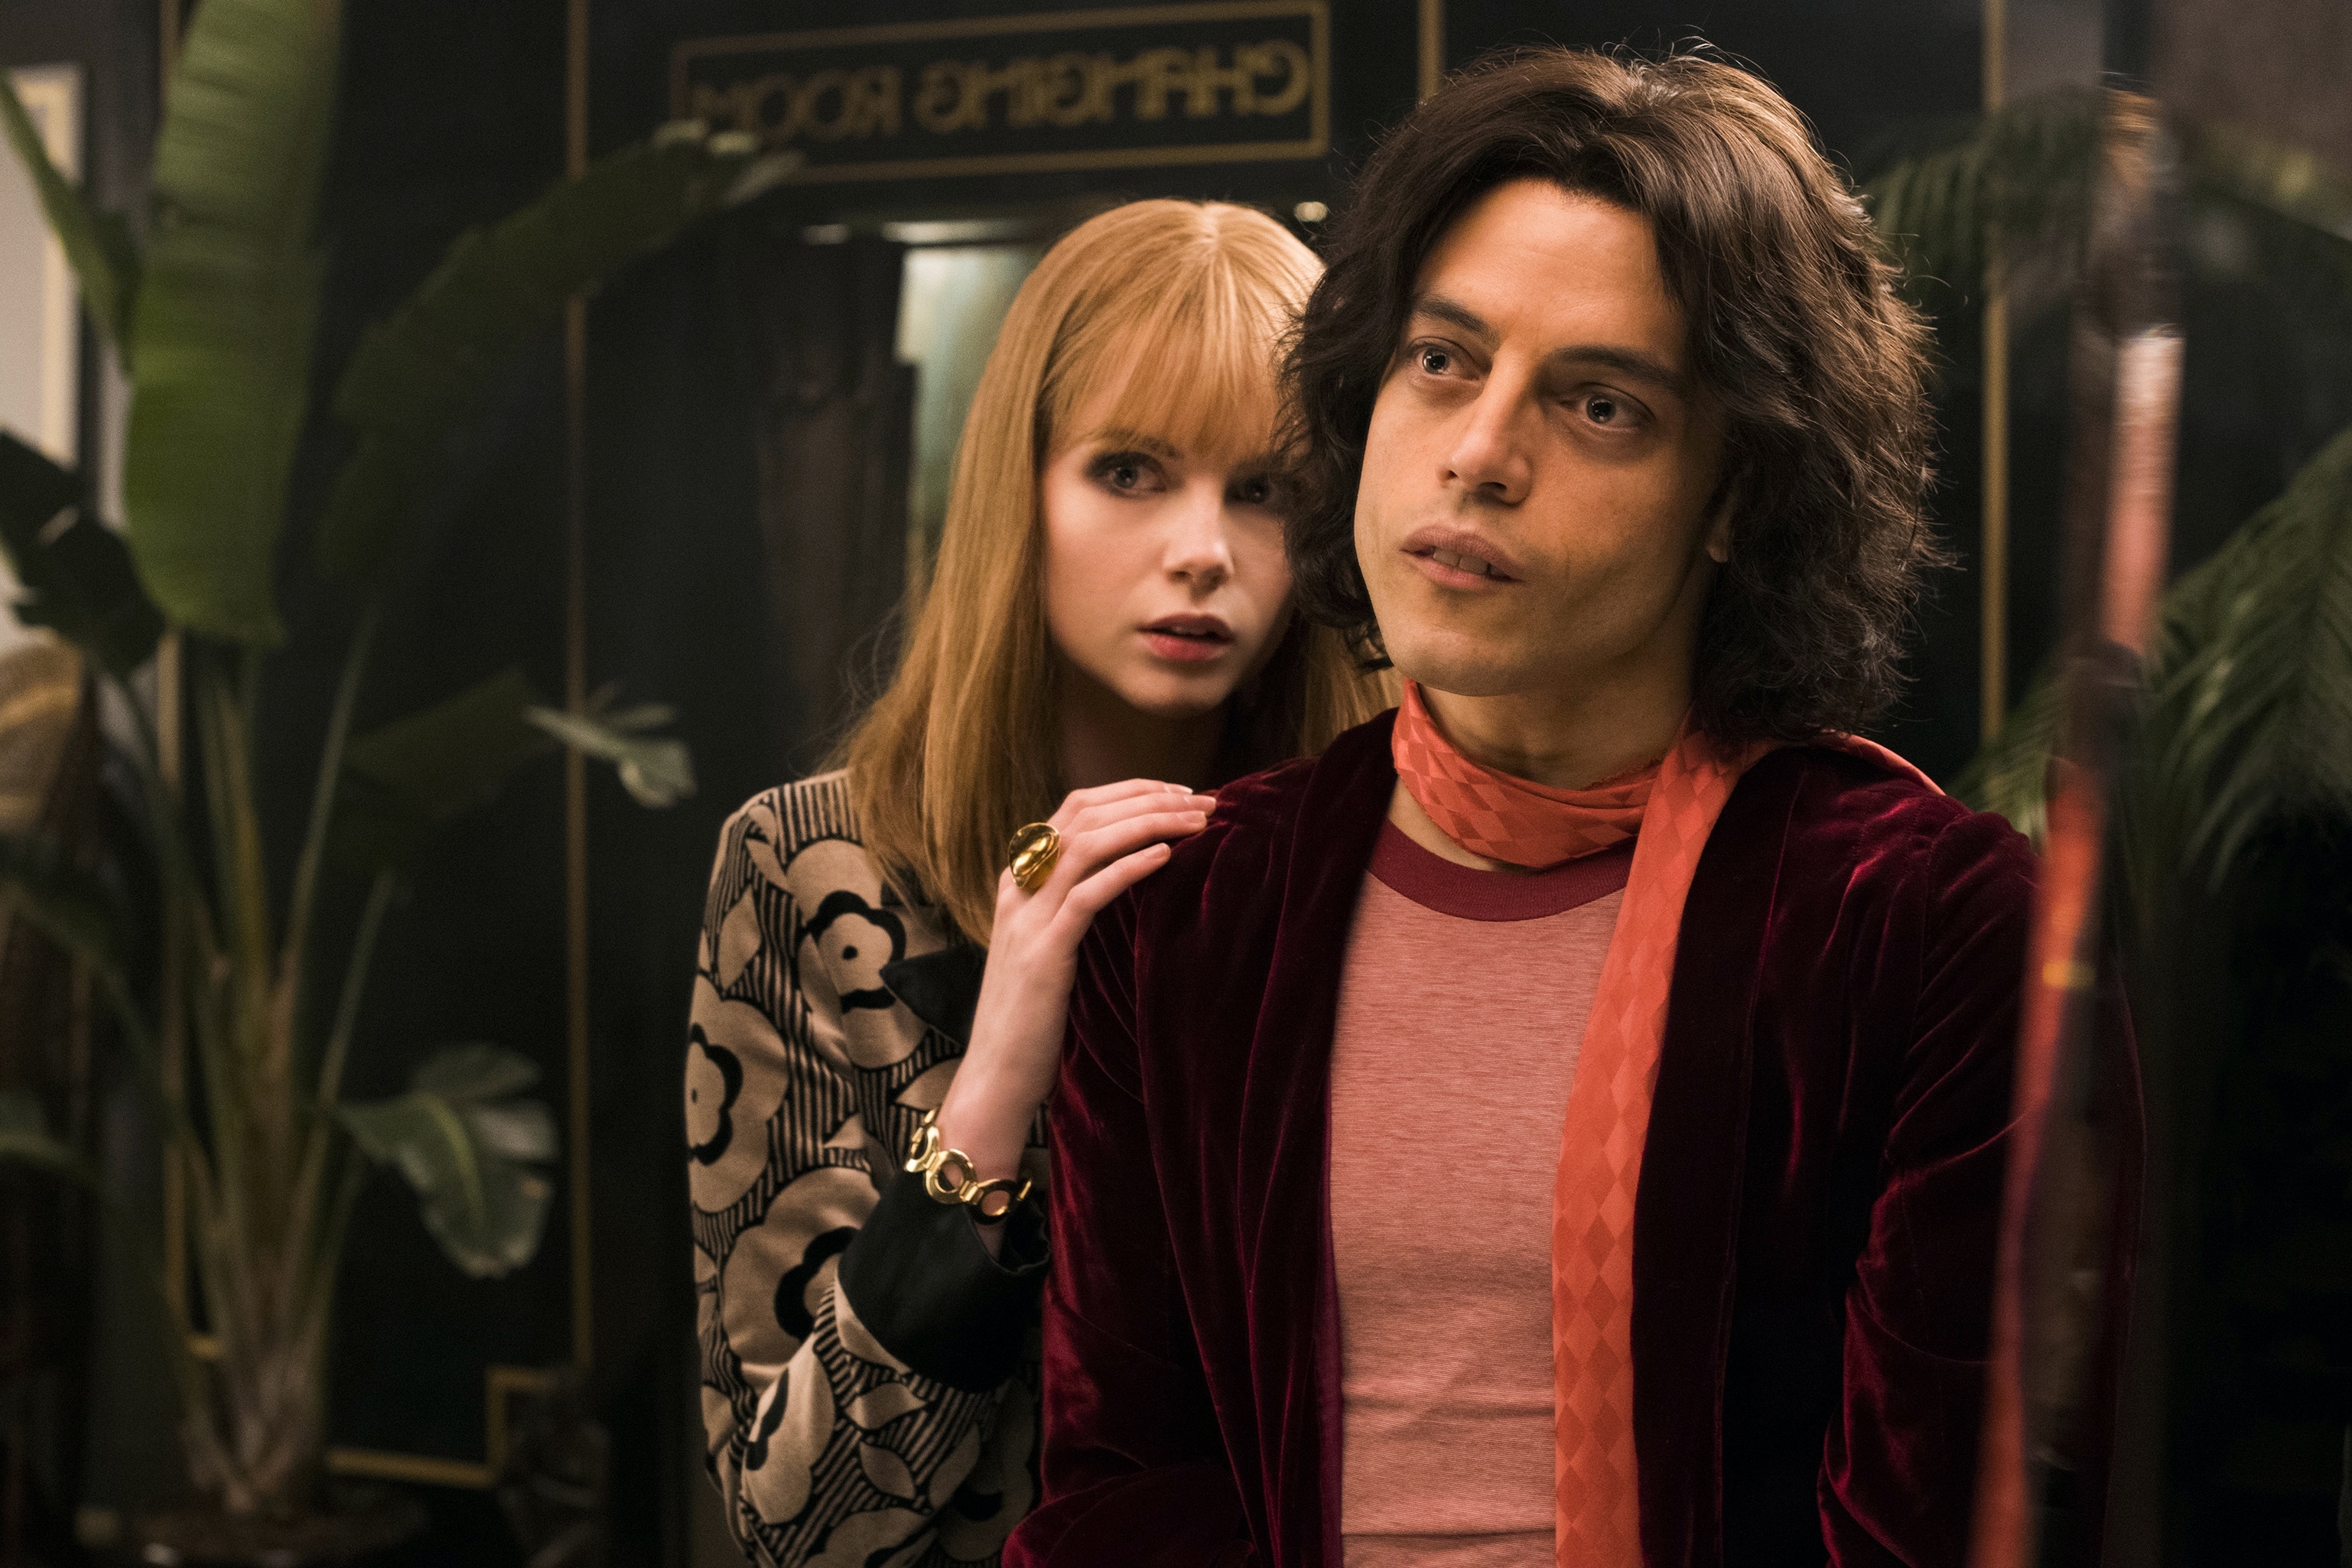 Rami Malek as Freddie and Lucy Boynton as Mary in the Bohemian Rhapsody biopic